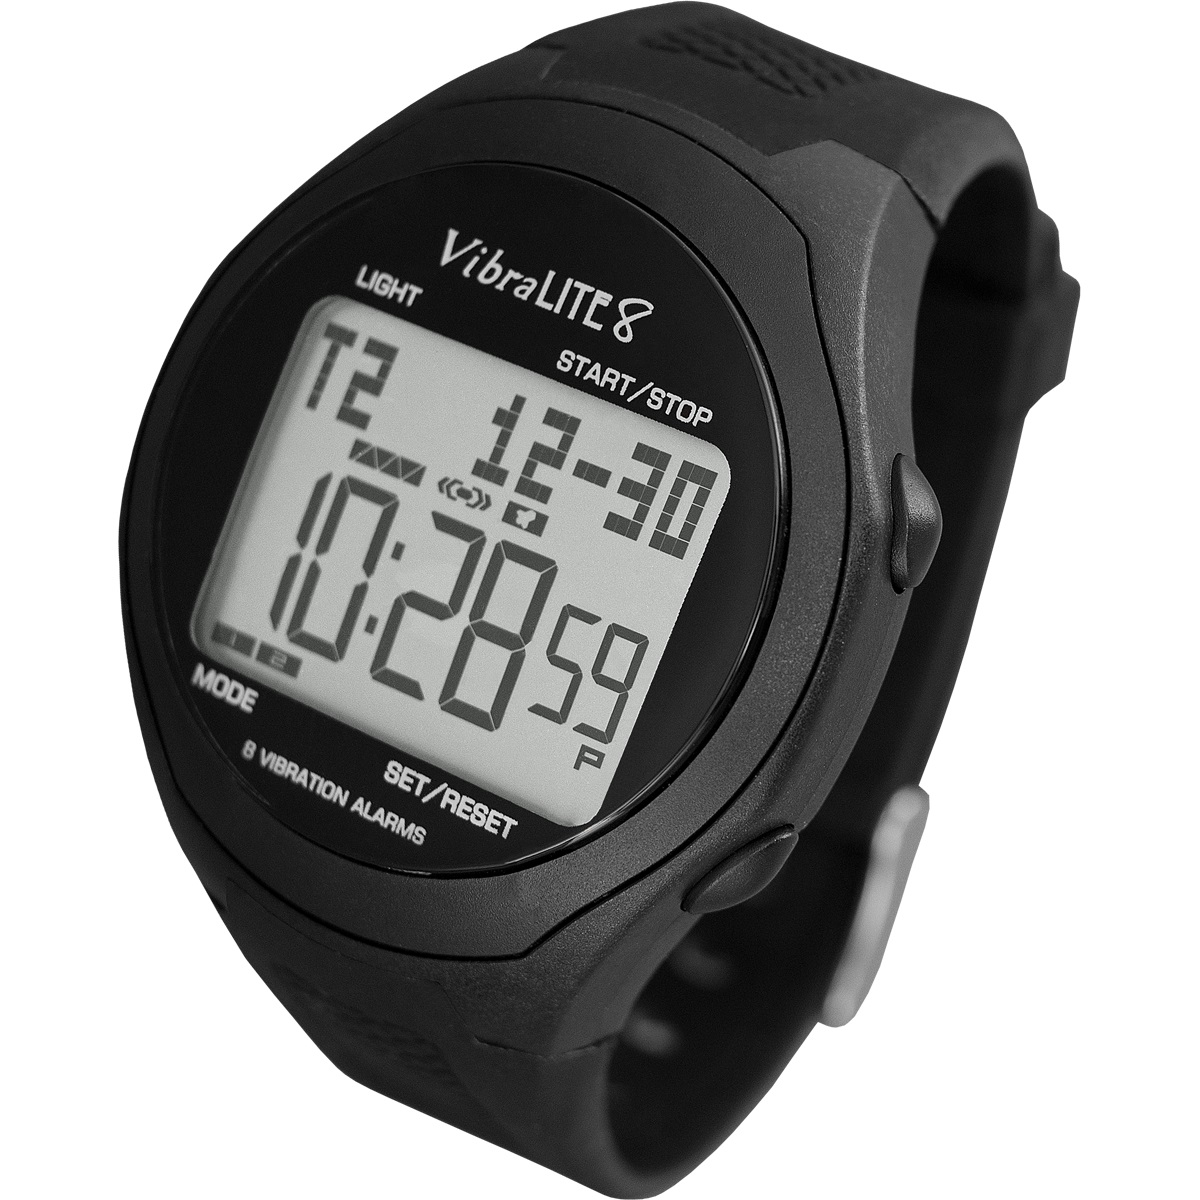 Vibralite 8 Vibrating Watch Alarm